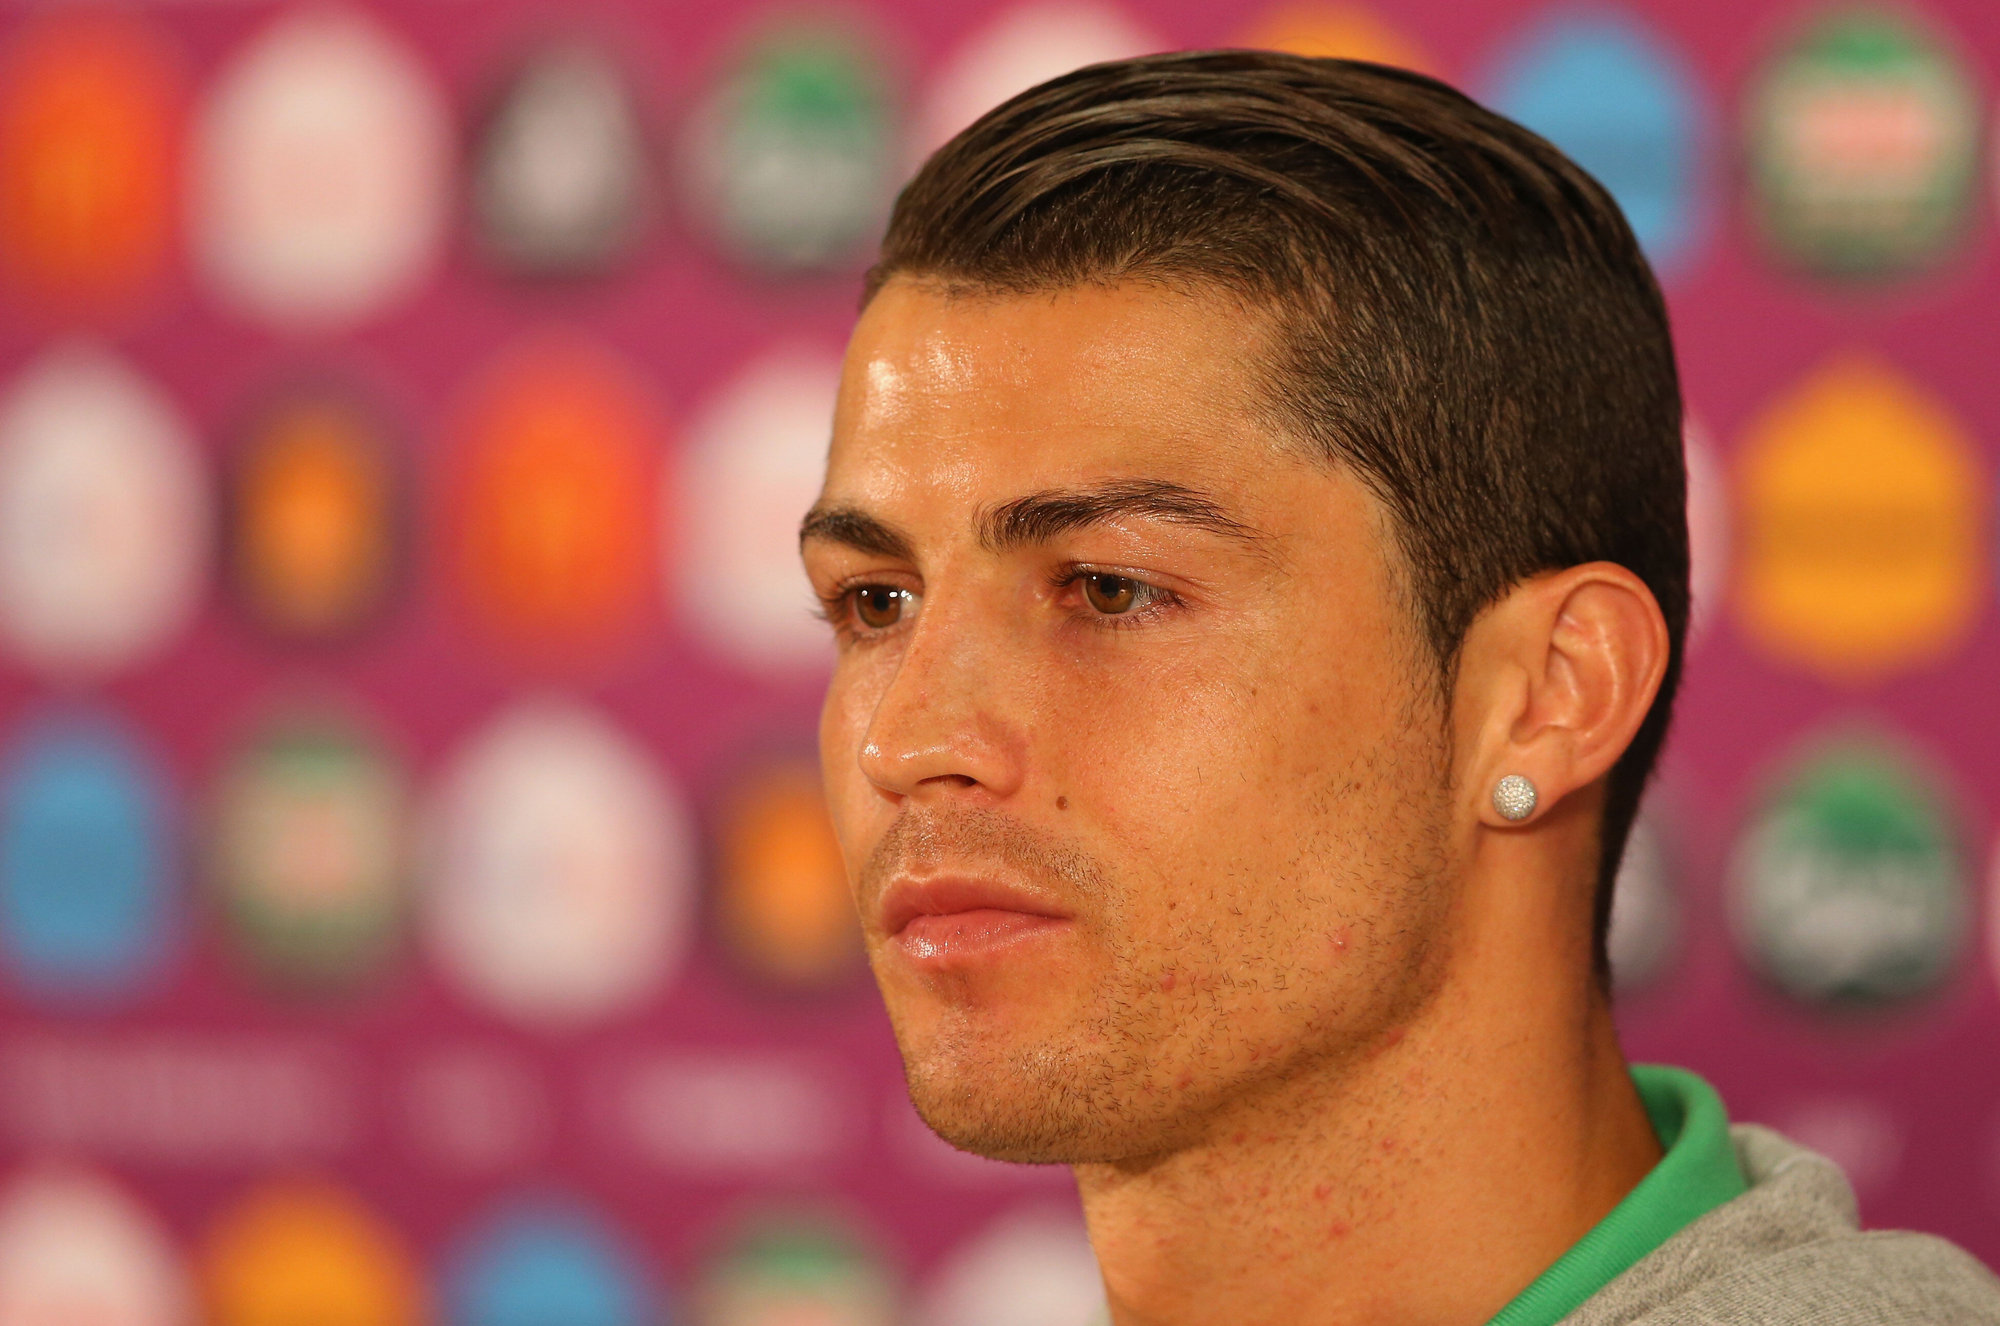 Cristiano-Ronaldo-Hairstyle-Full-HD-Wallpaper.jpg